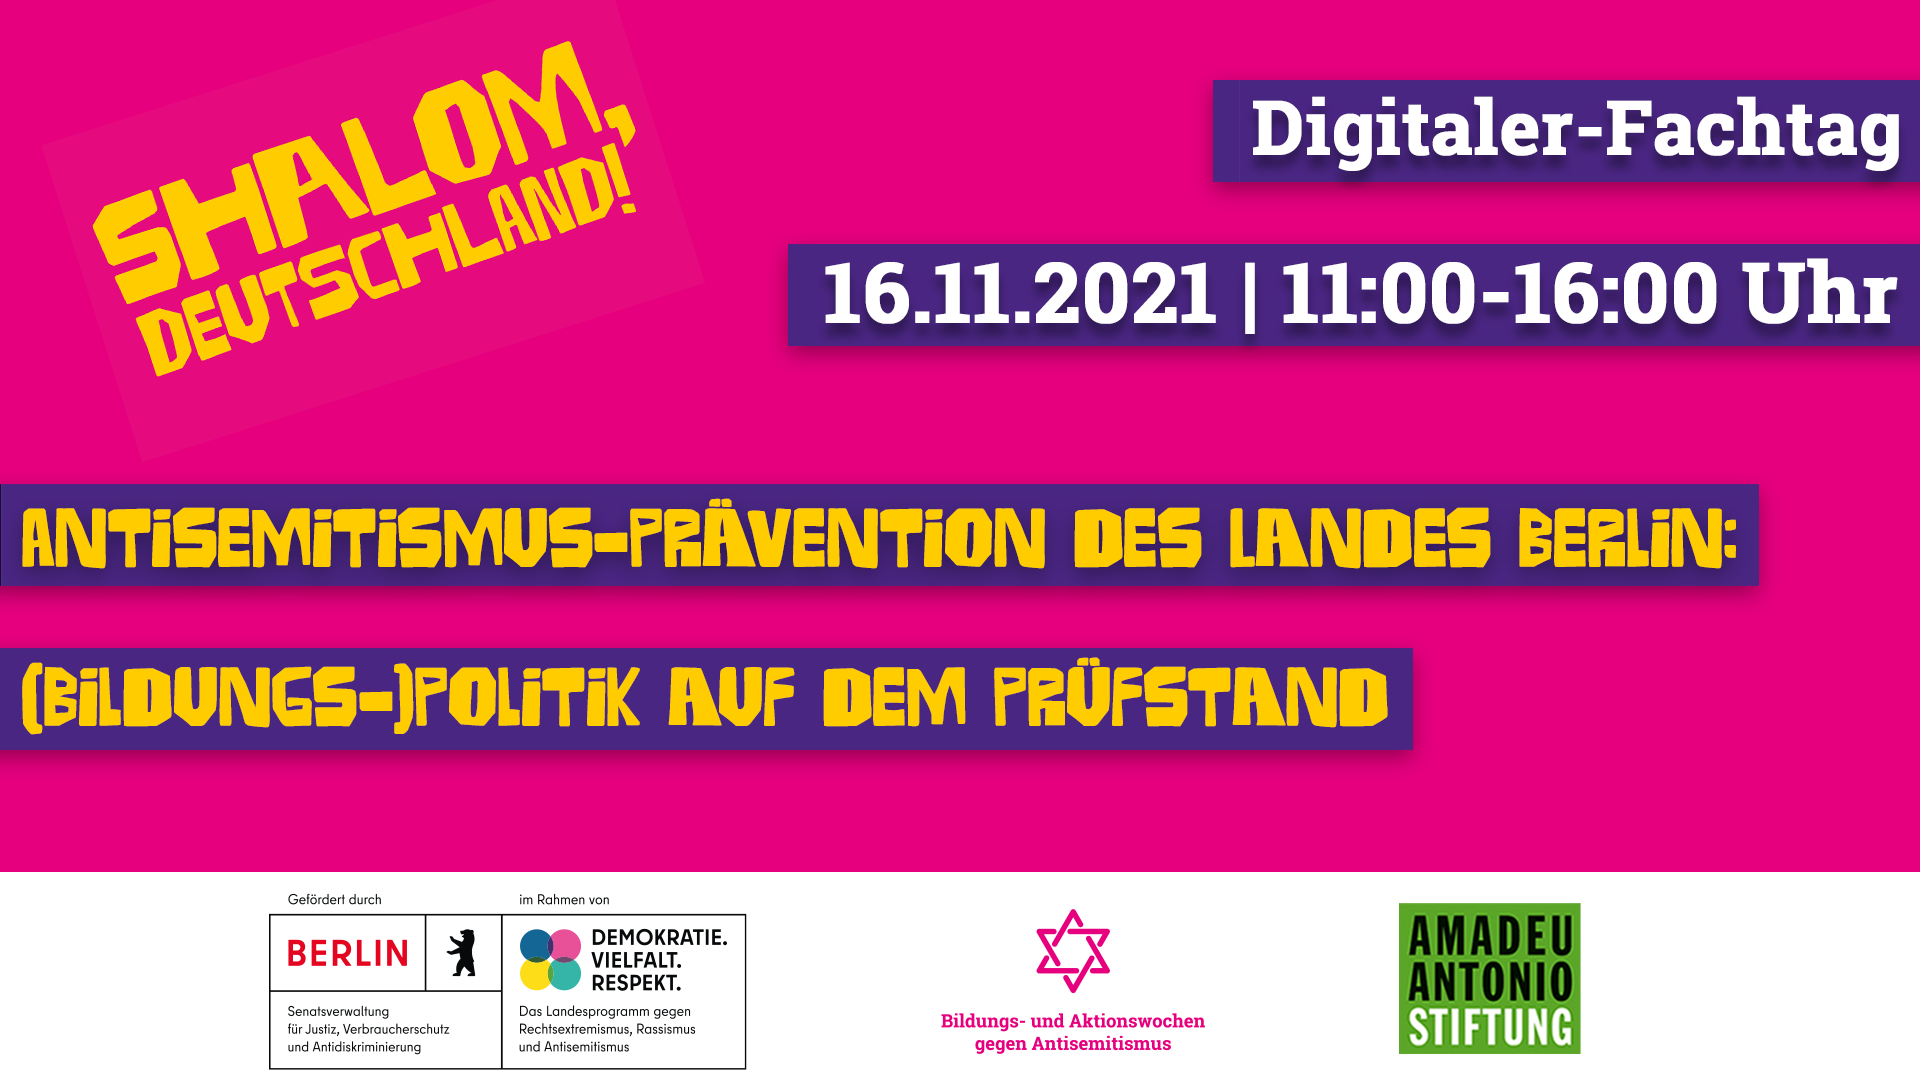 003 Digitaler Fachtag Aktionswochen Berlin-FB und HP